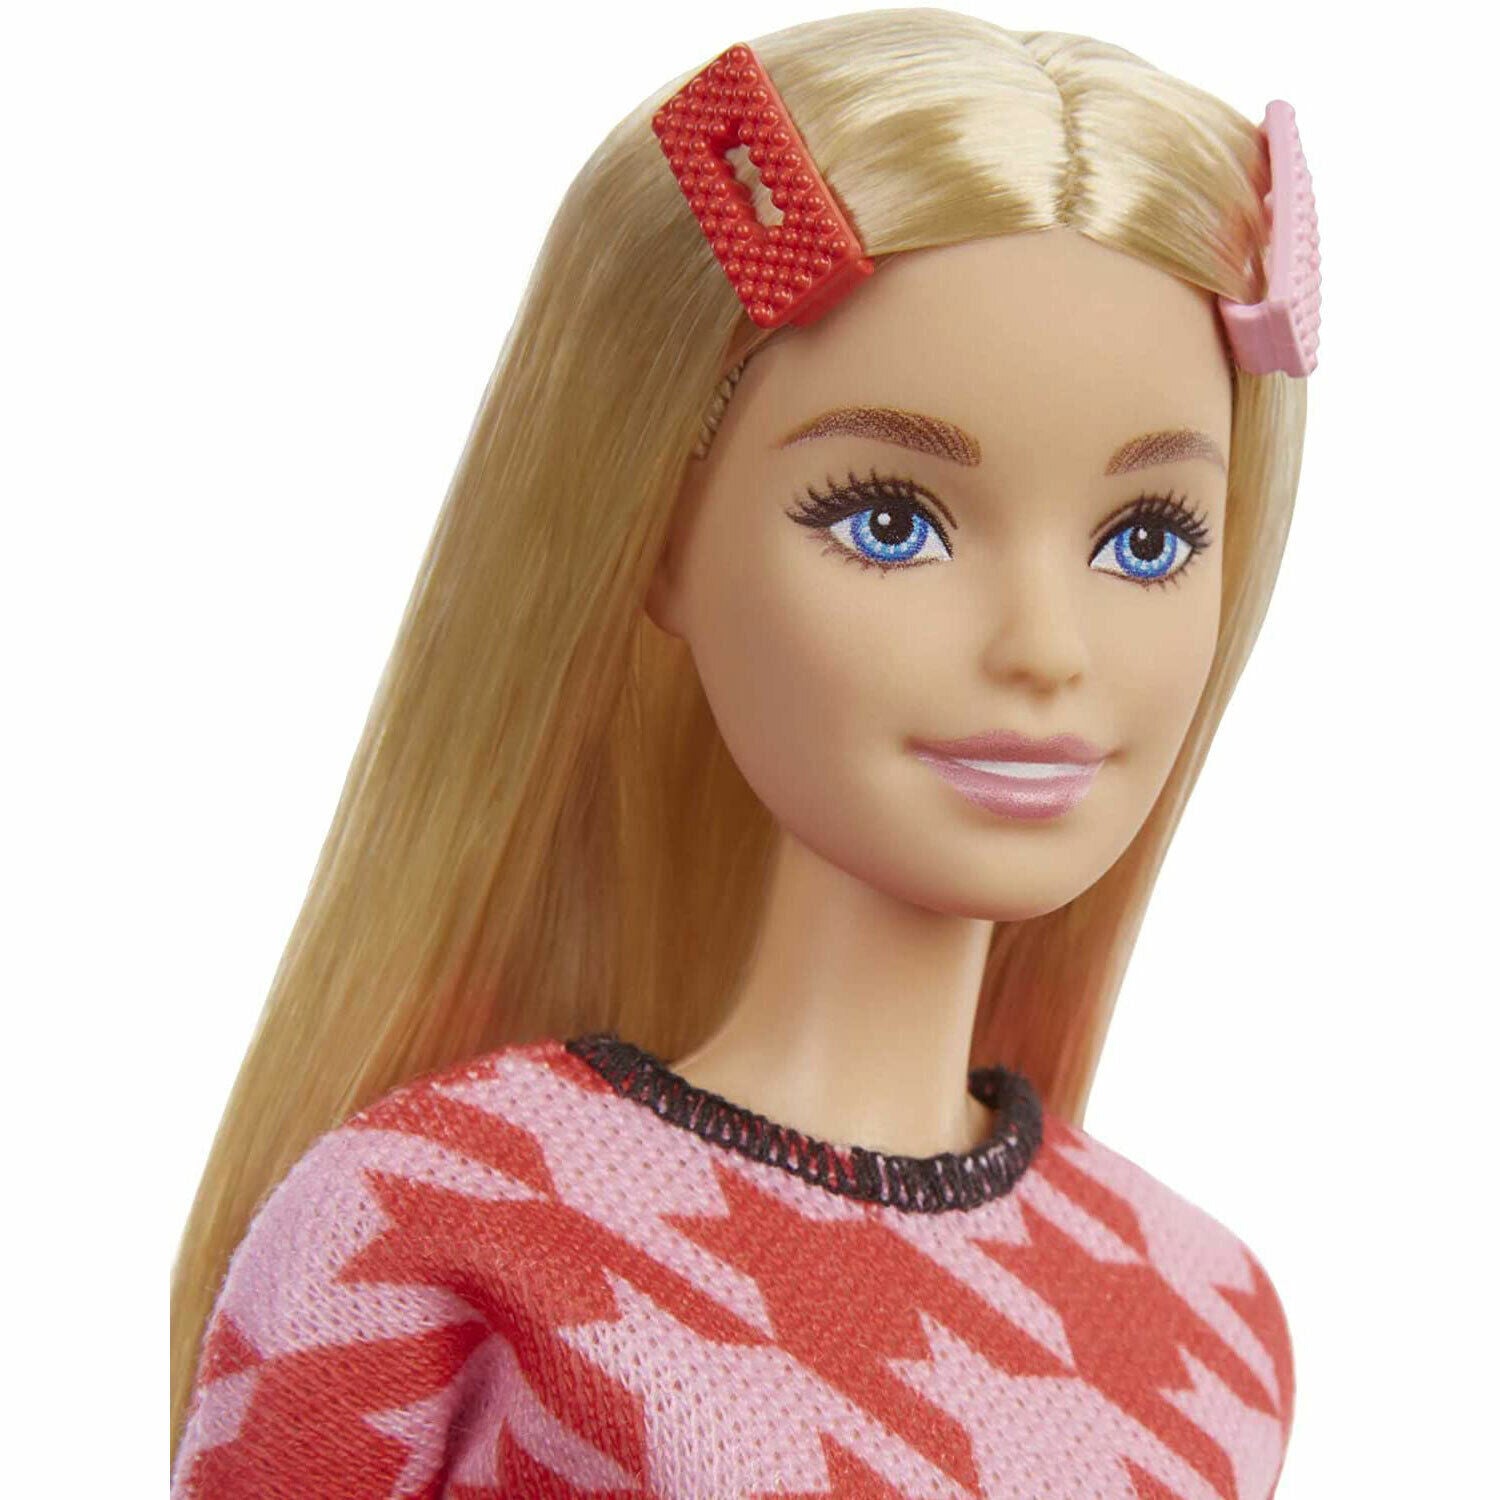 New Barbie Fashionistas Doll #169 Blonde Crop Top